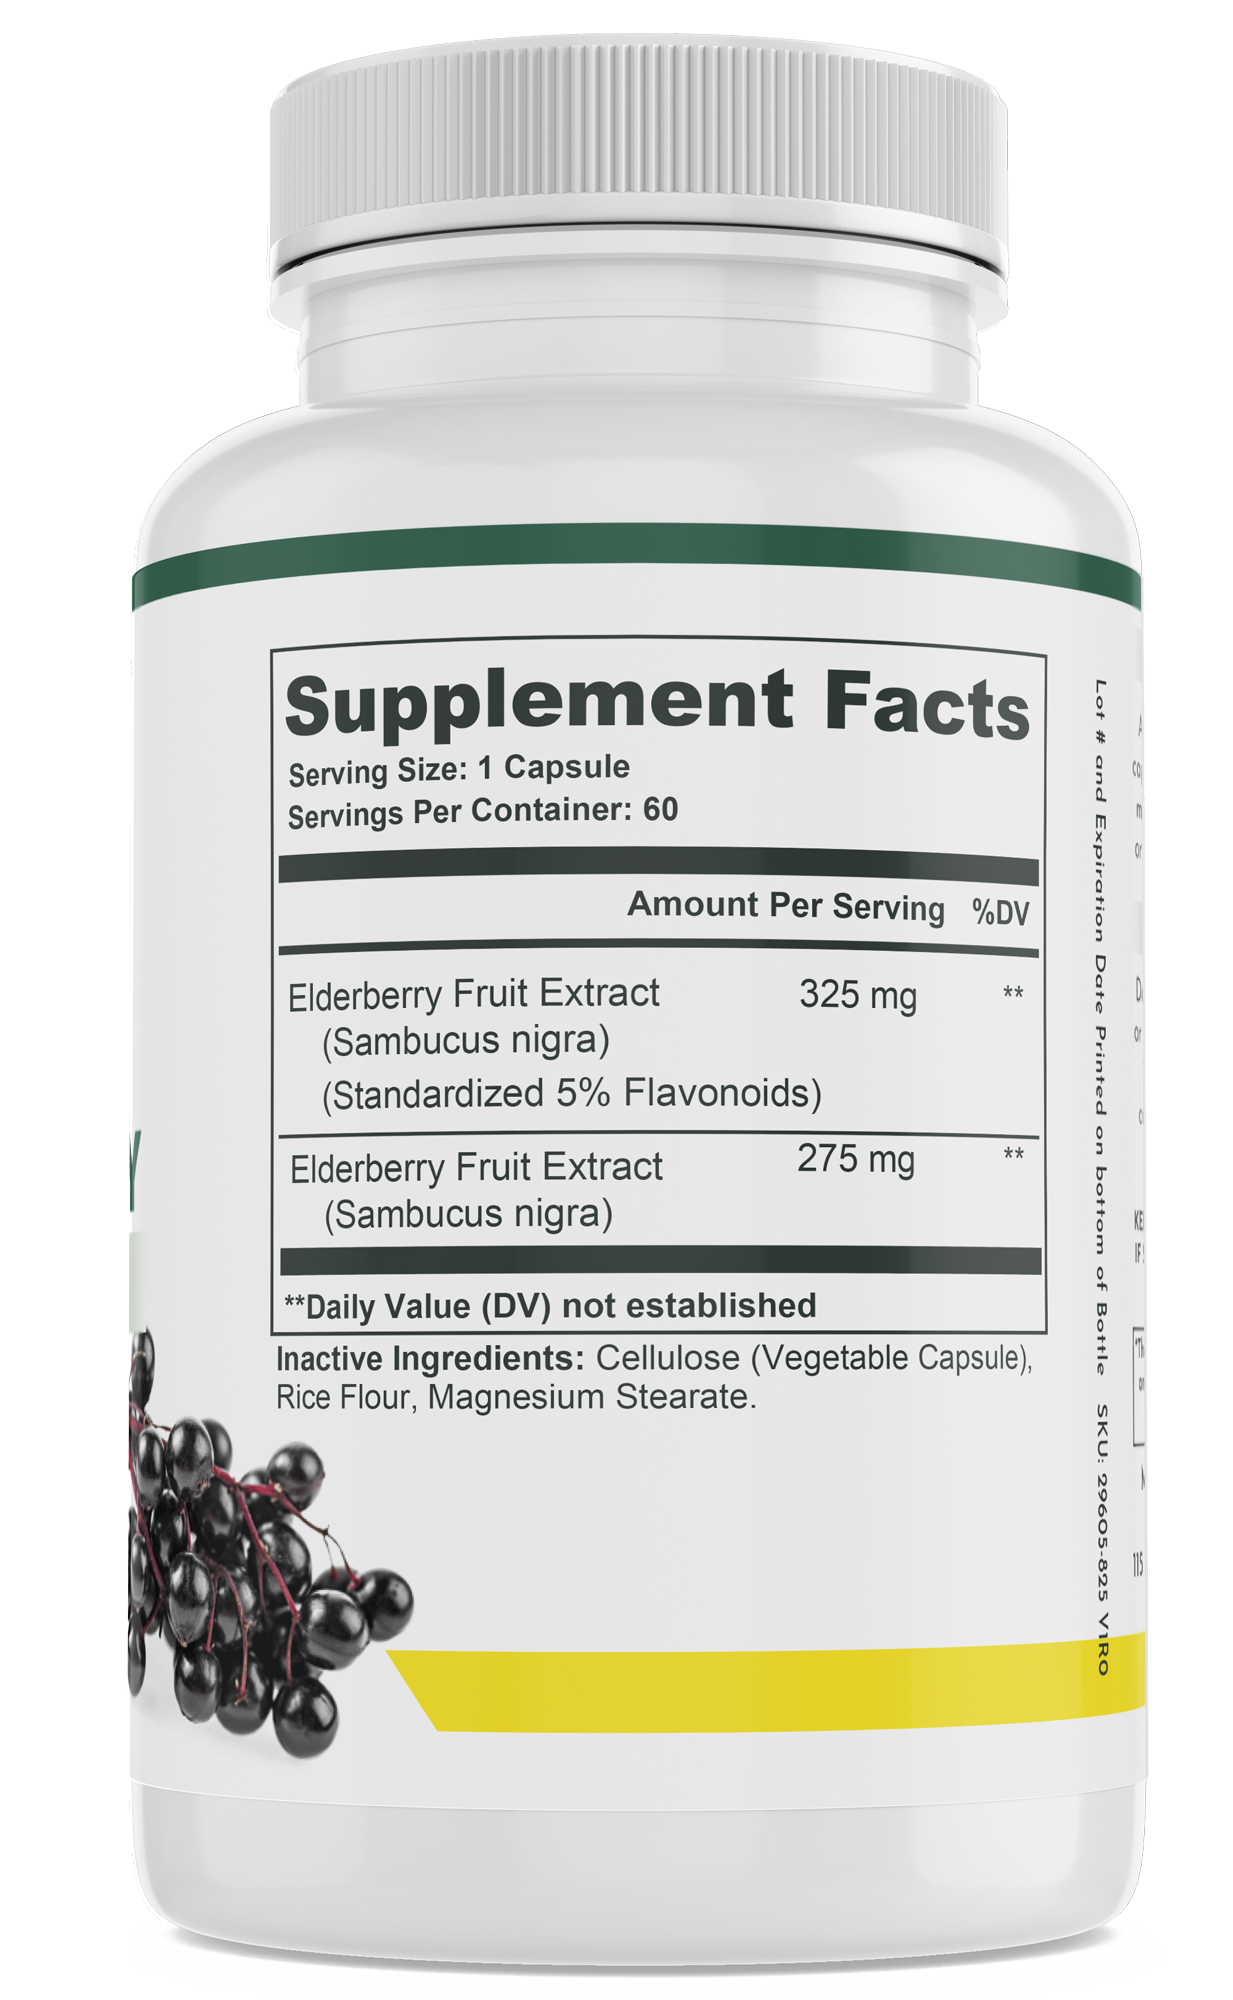 supplement facts on a supplement bottle for elderberry supplement